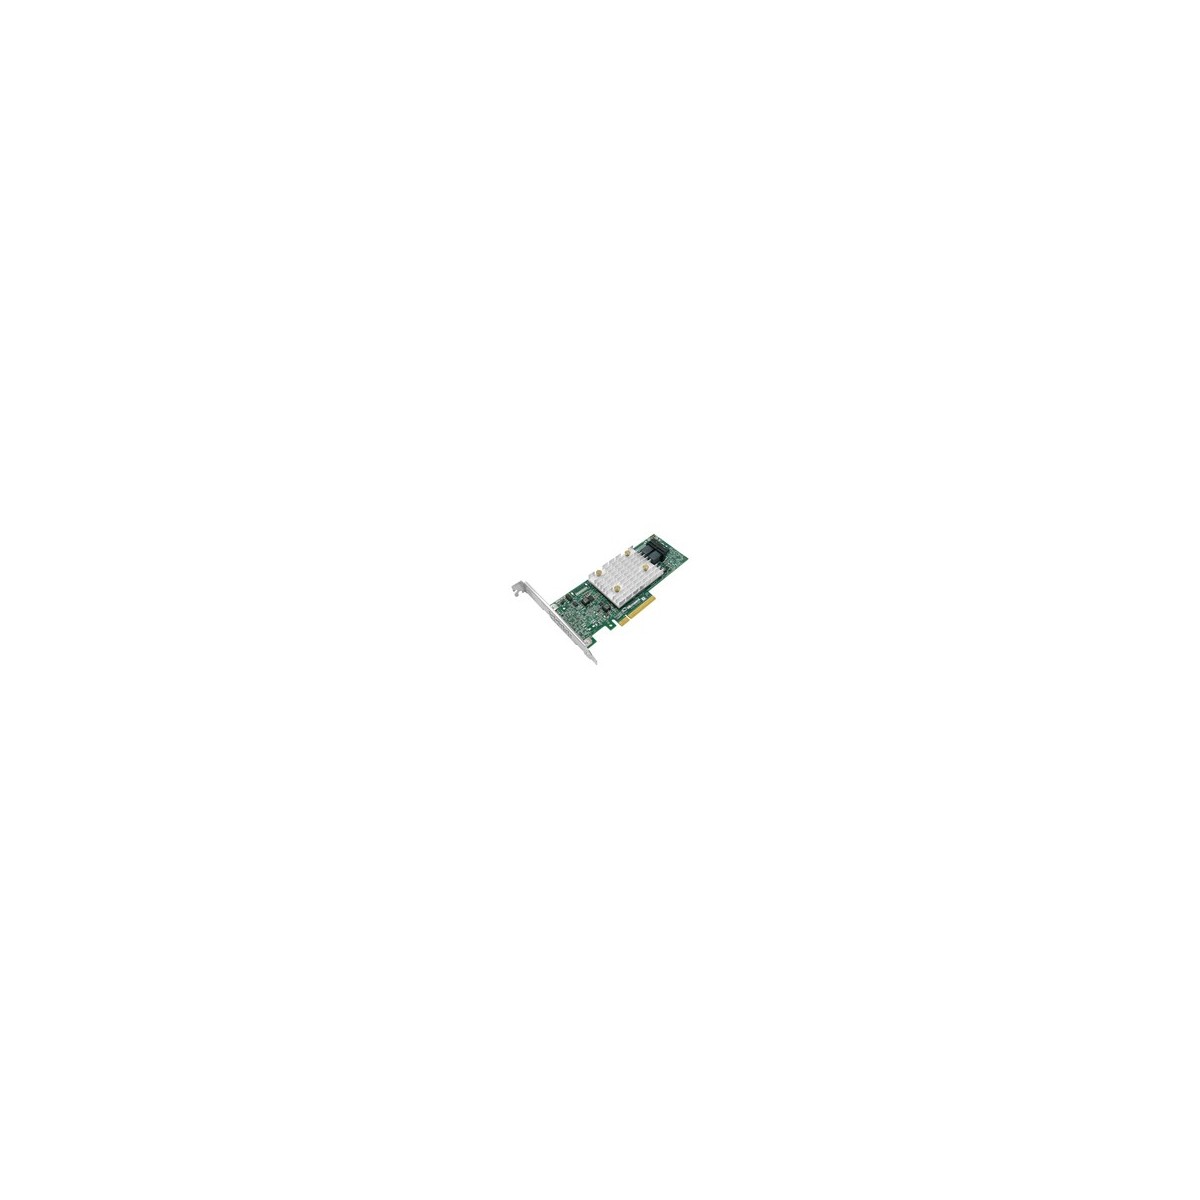 Microchip Technology HBA 1100-8I - PCIe - Mini-SAS HD - Low-profile - PCI 3.0 - 1360000 h - CE - FCC - UL - C-tick - VCCI - KCC 